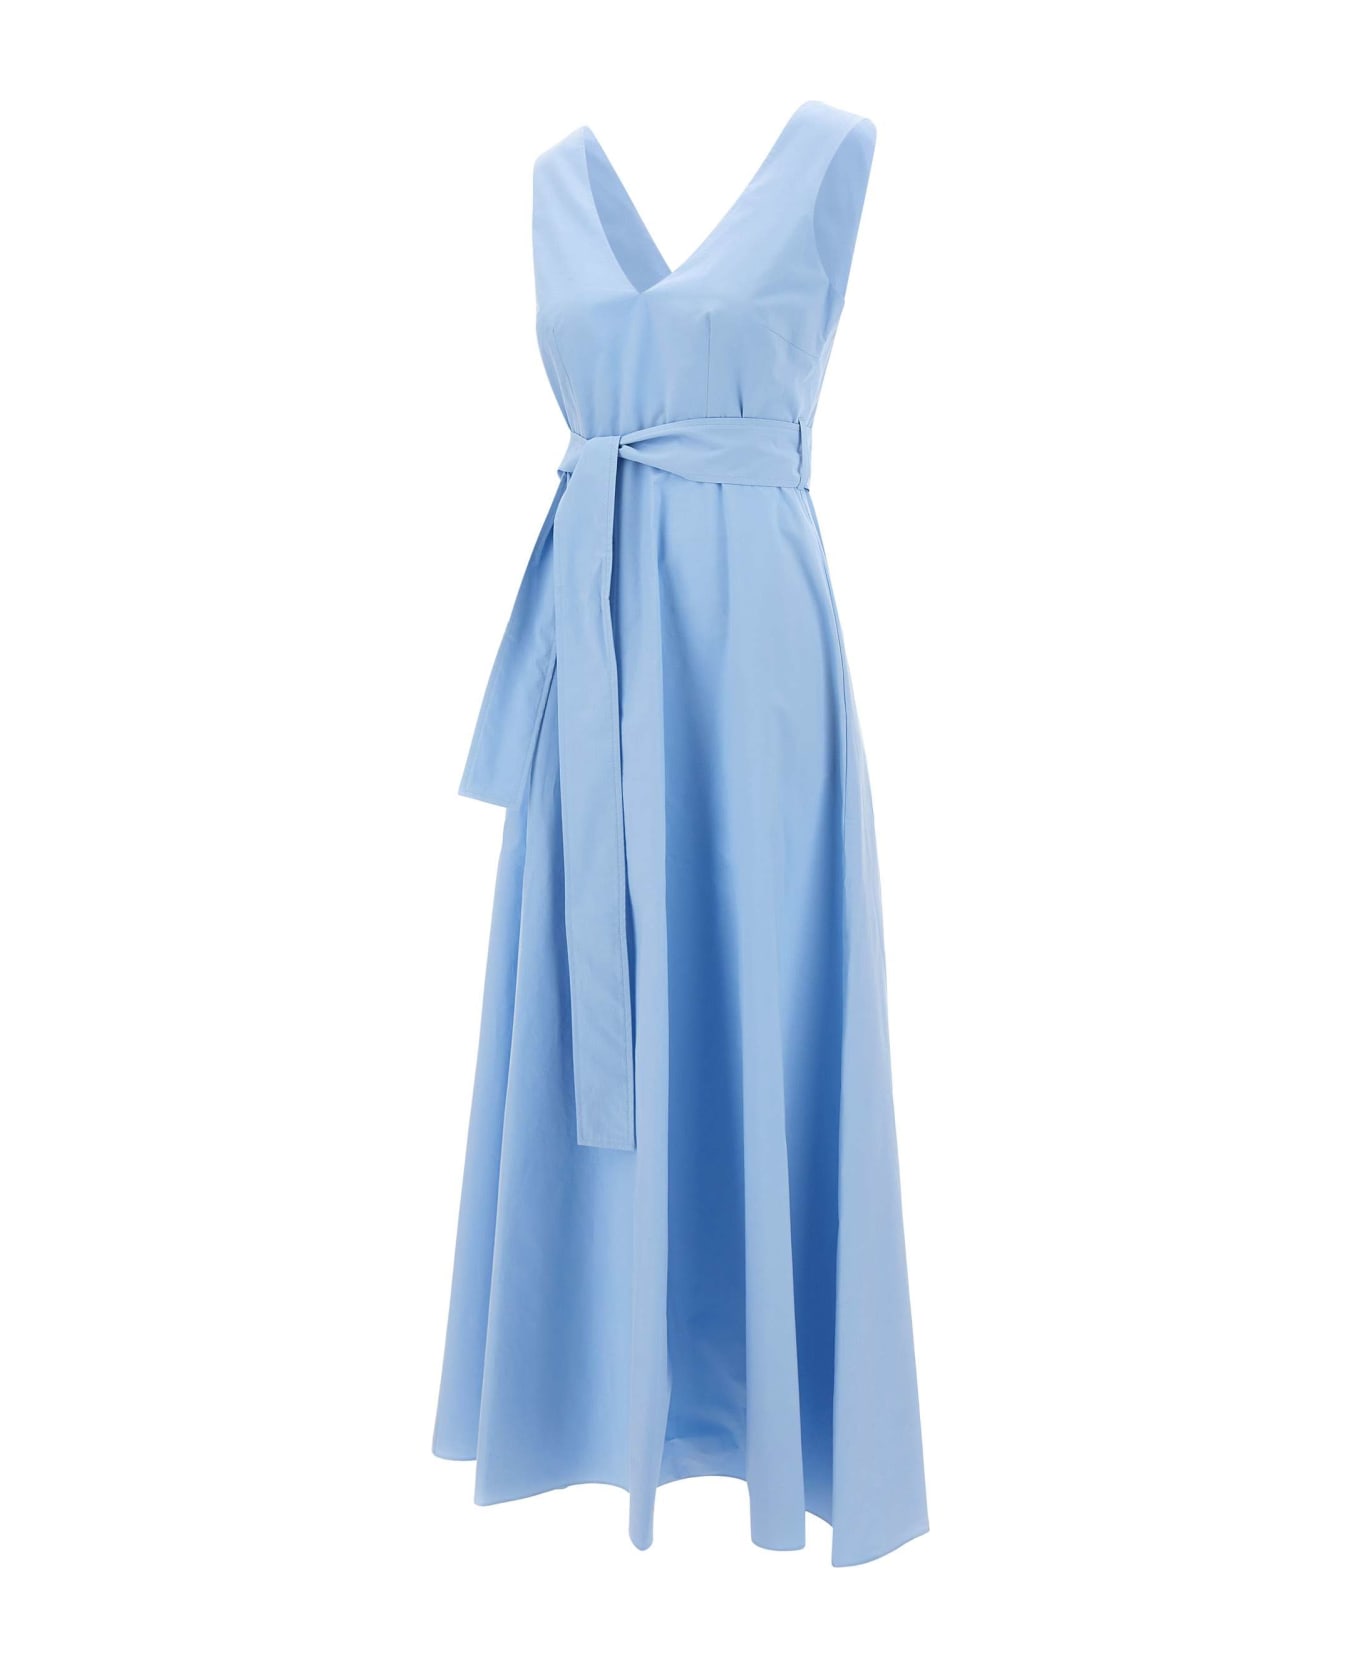 Parosh "canyox24" Cotton Dress - LIGHT BLUE